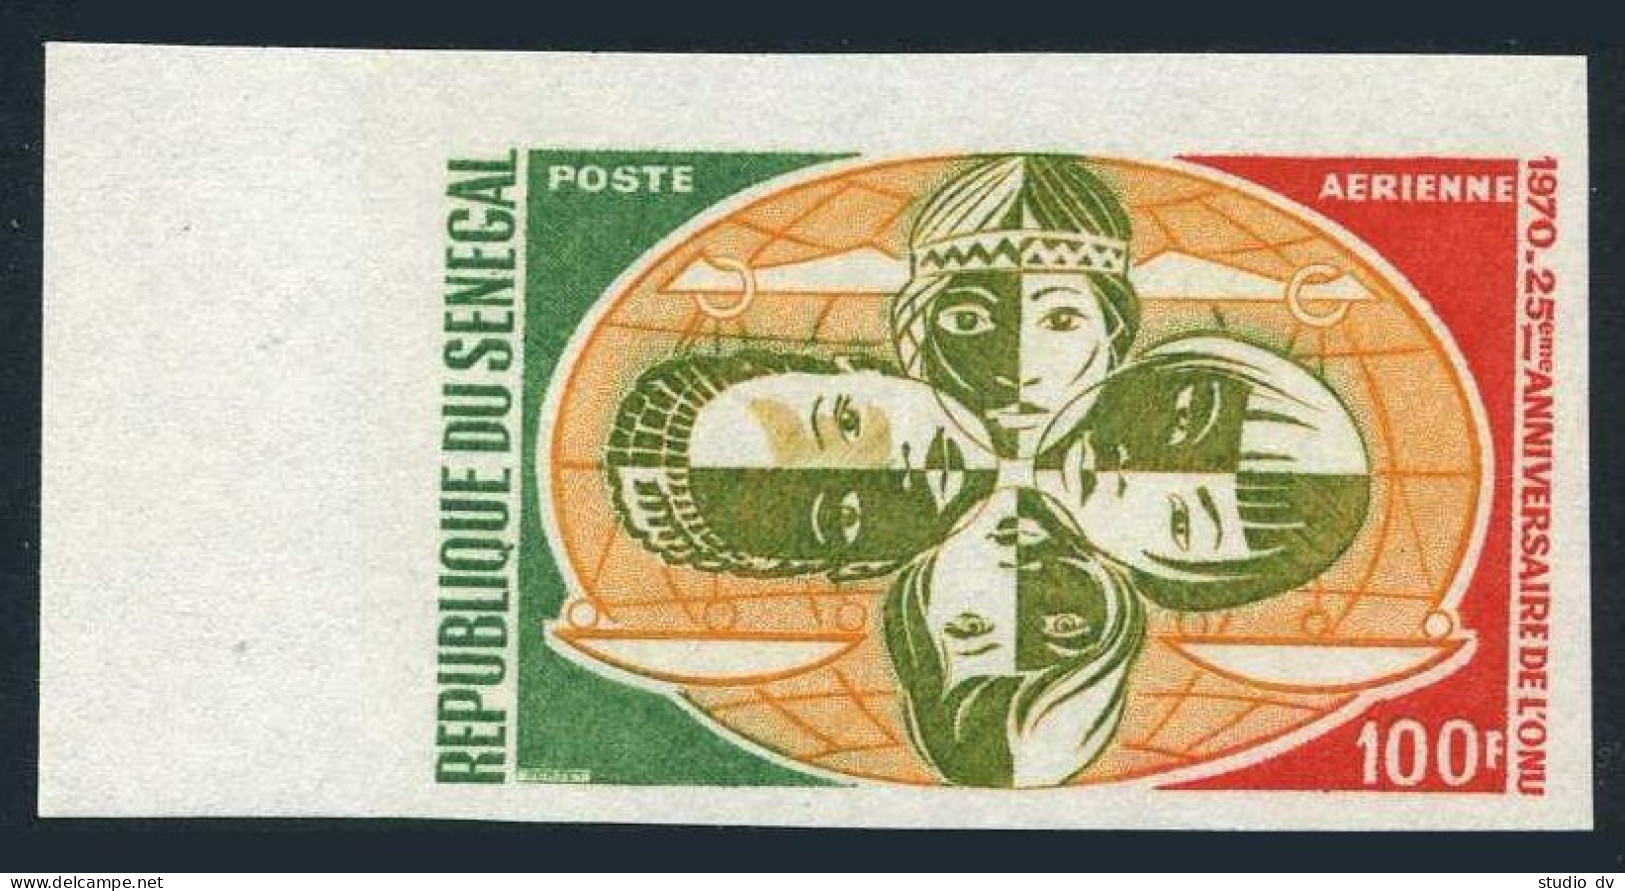 Senegal C91 Imperf,MNH.Michel 436B. UN,25th Ann.1970.Globe,Scales,Women. - Senegal (1960-...)